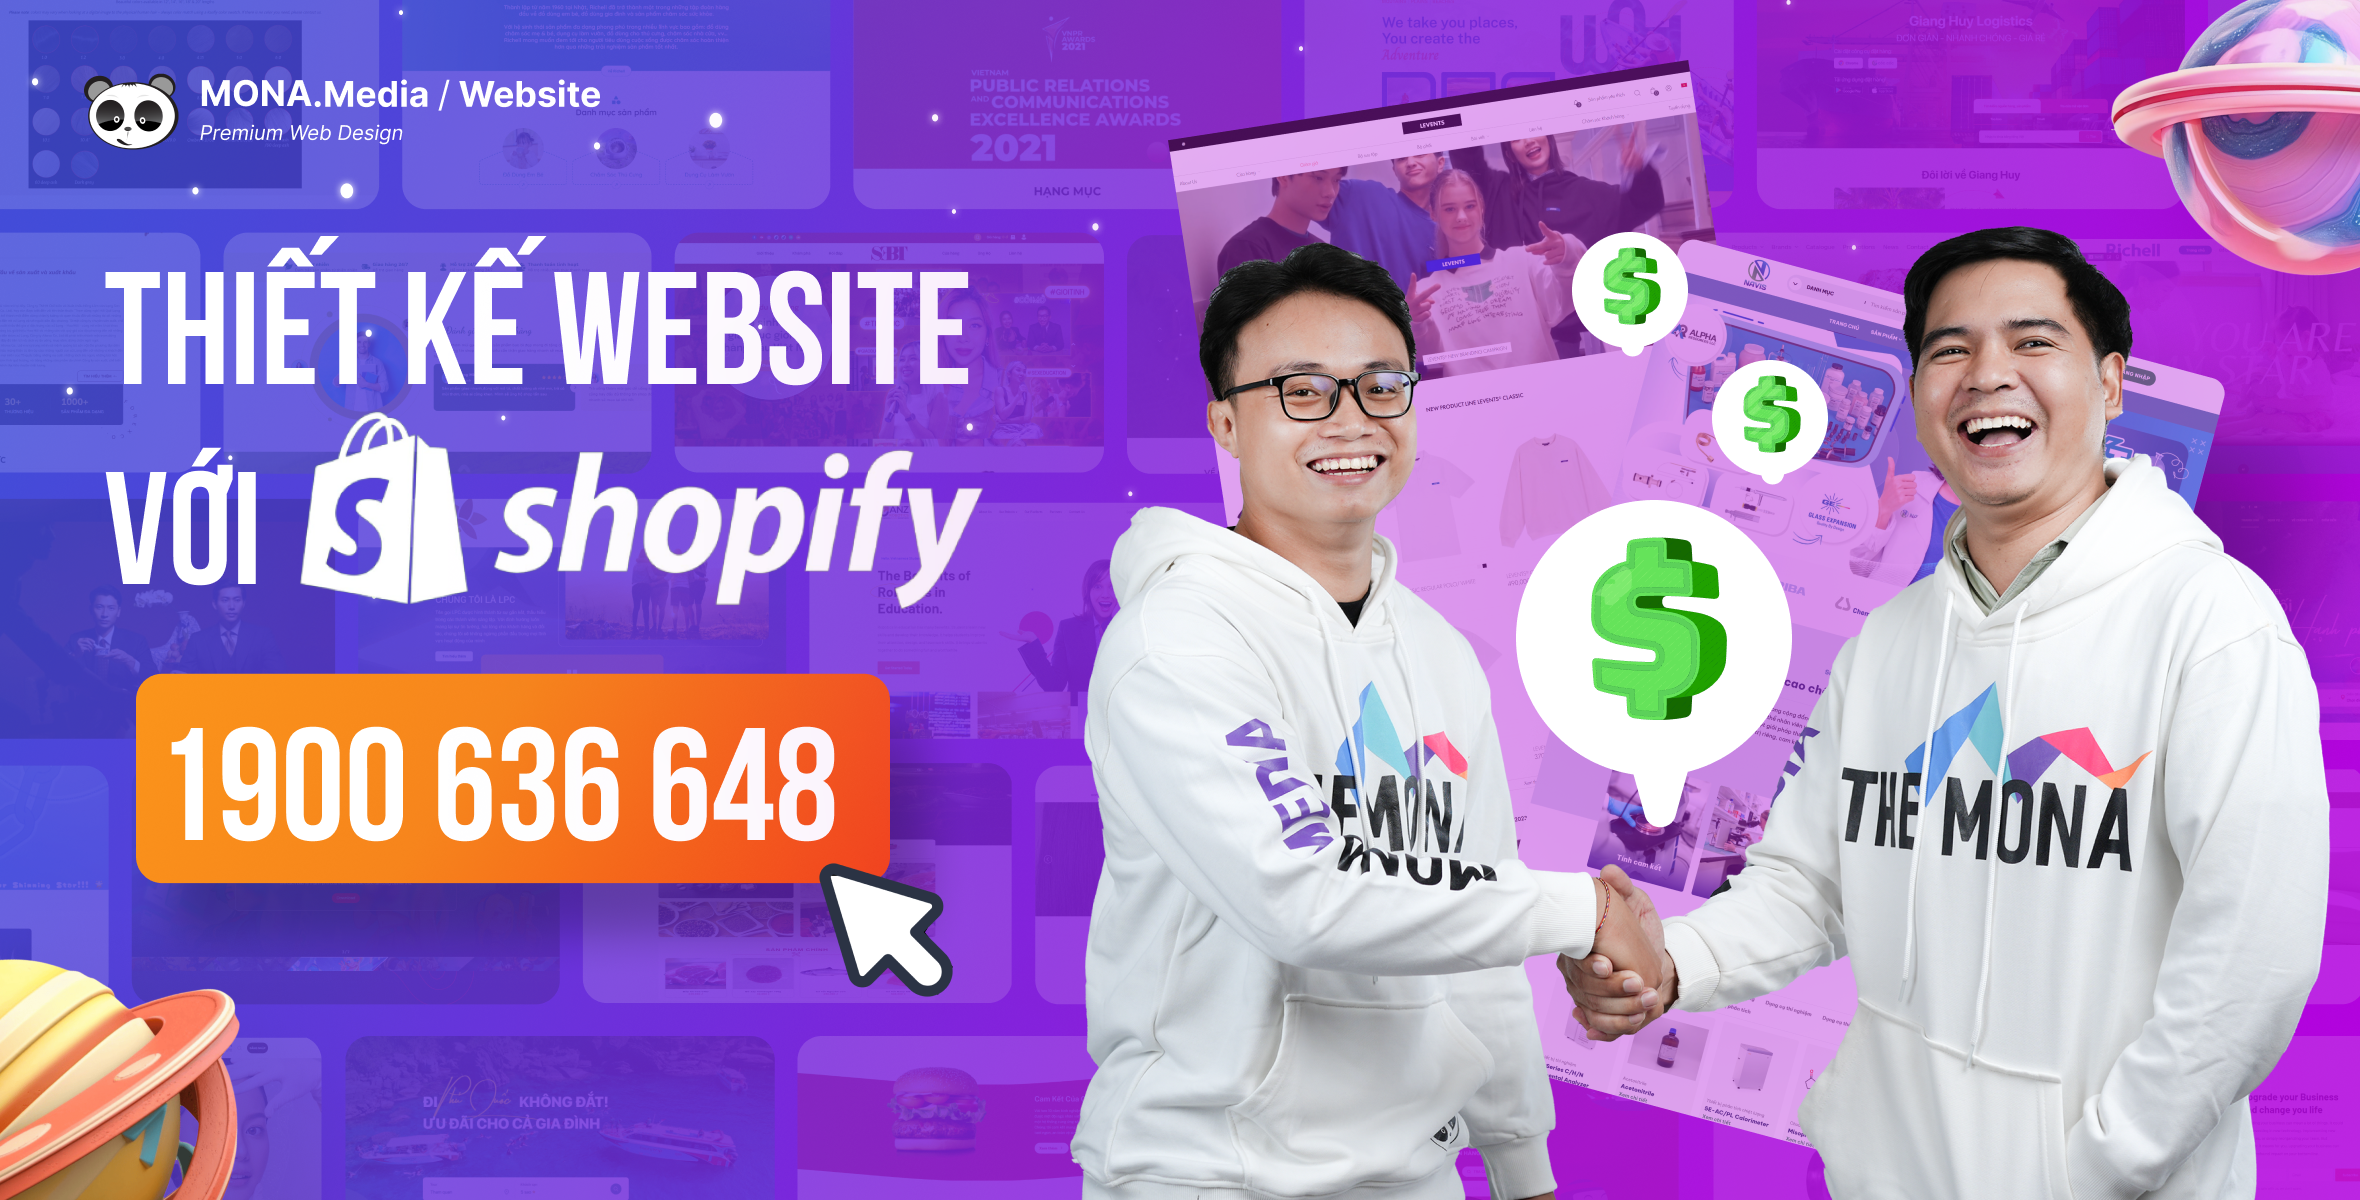 Thiết kế website với Shopify tại MONA Media